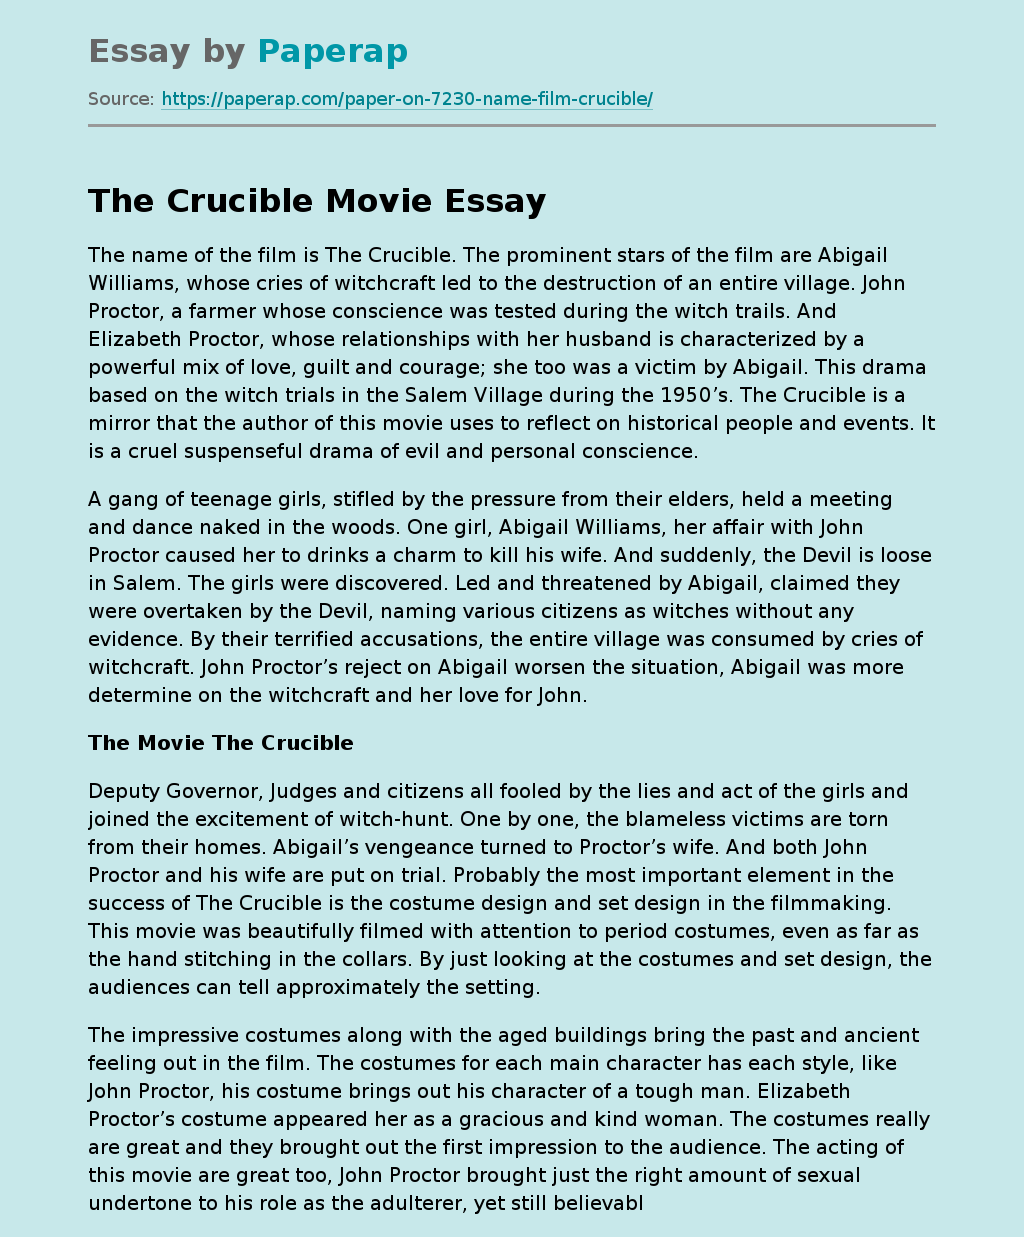 The Crucible Movie